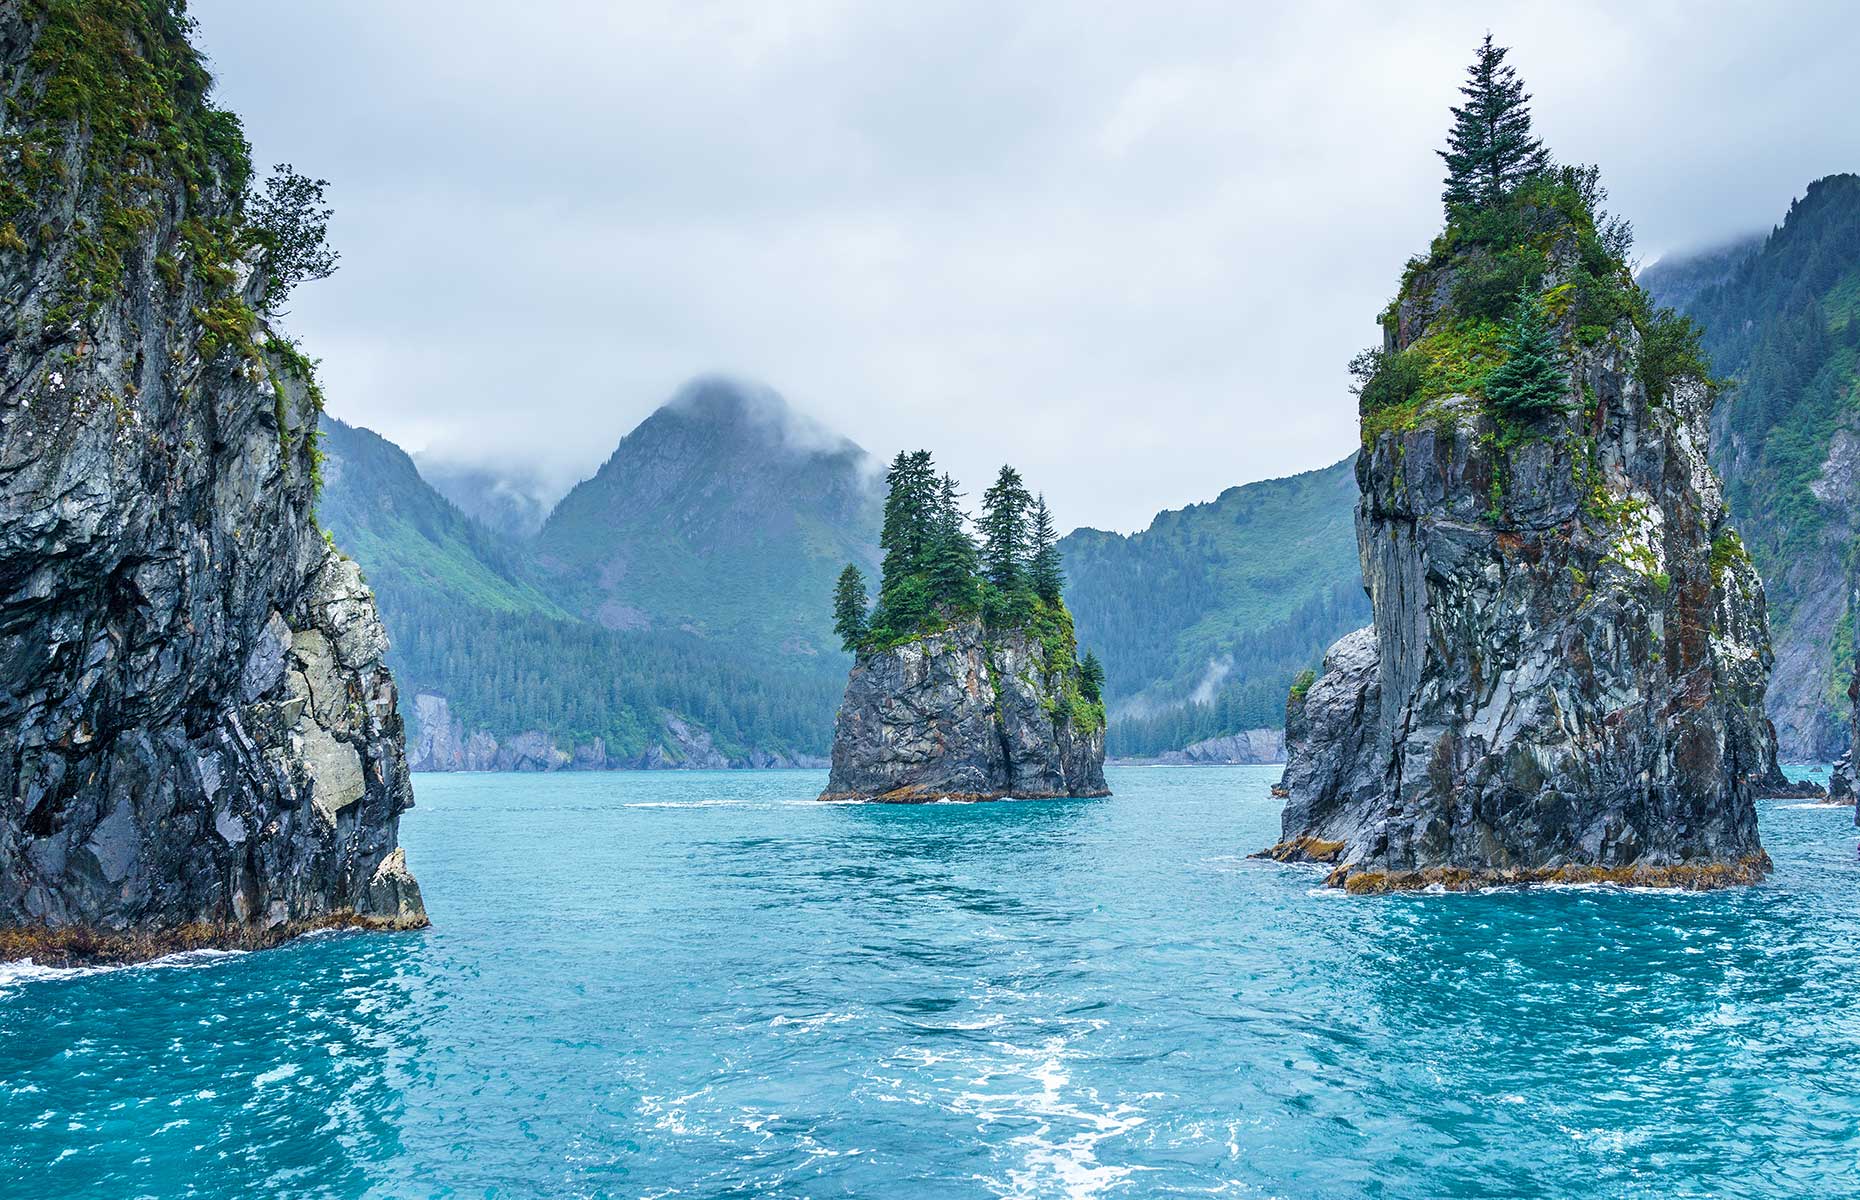 Kenai fjords, Alaska (Image:Sekar B/Shutterstock)